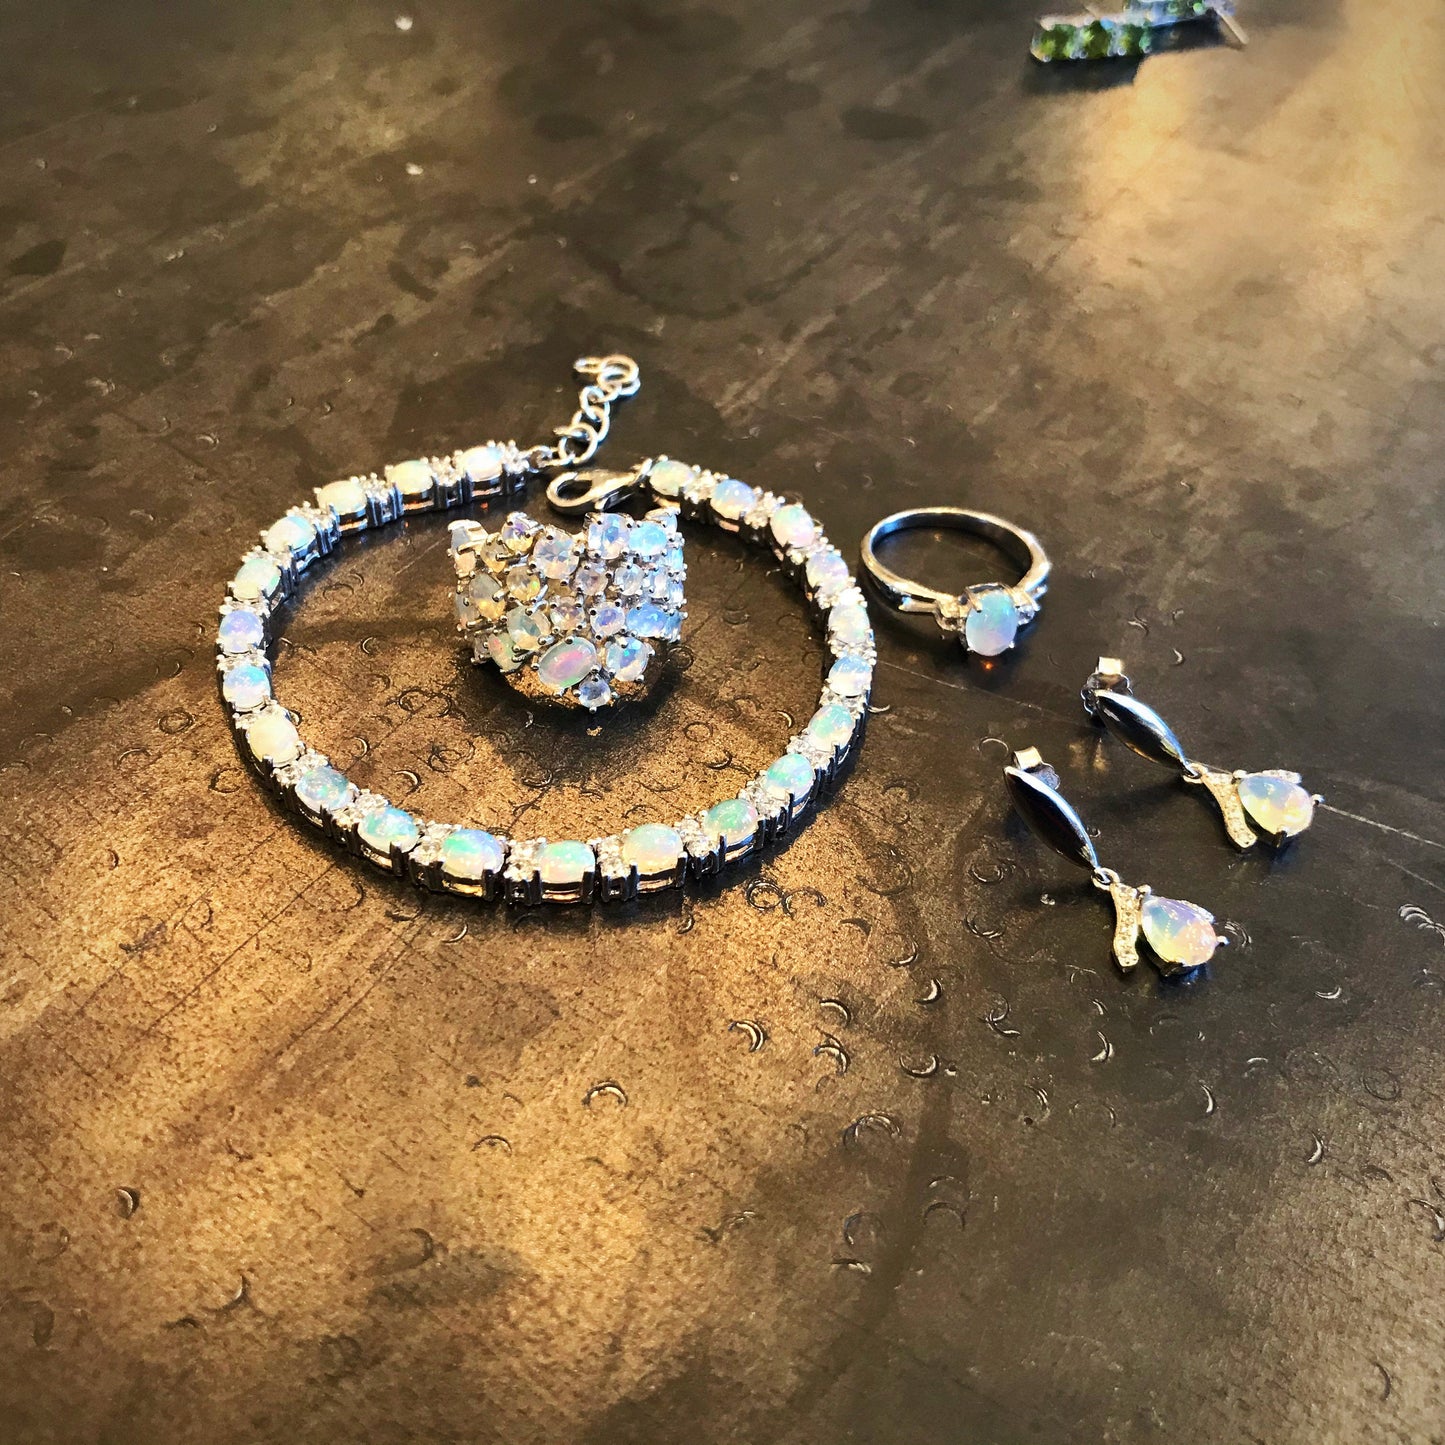 Artisan Handmade Sterling Silver Abstract  opal stud modernist earrings